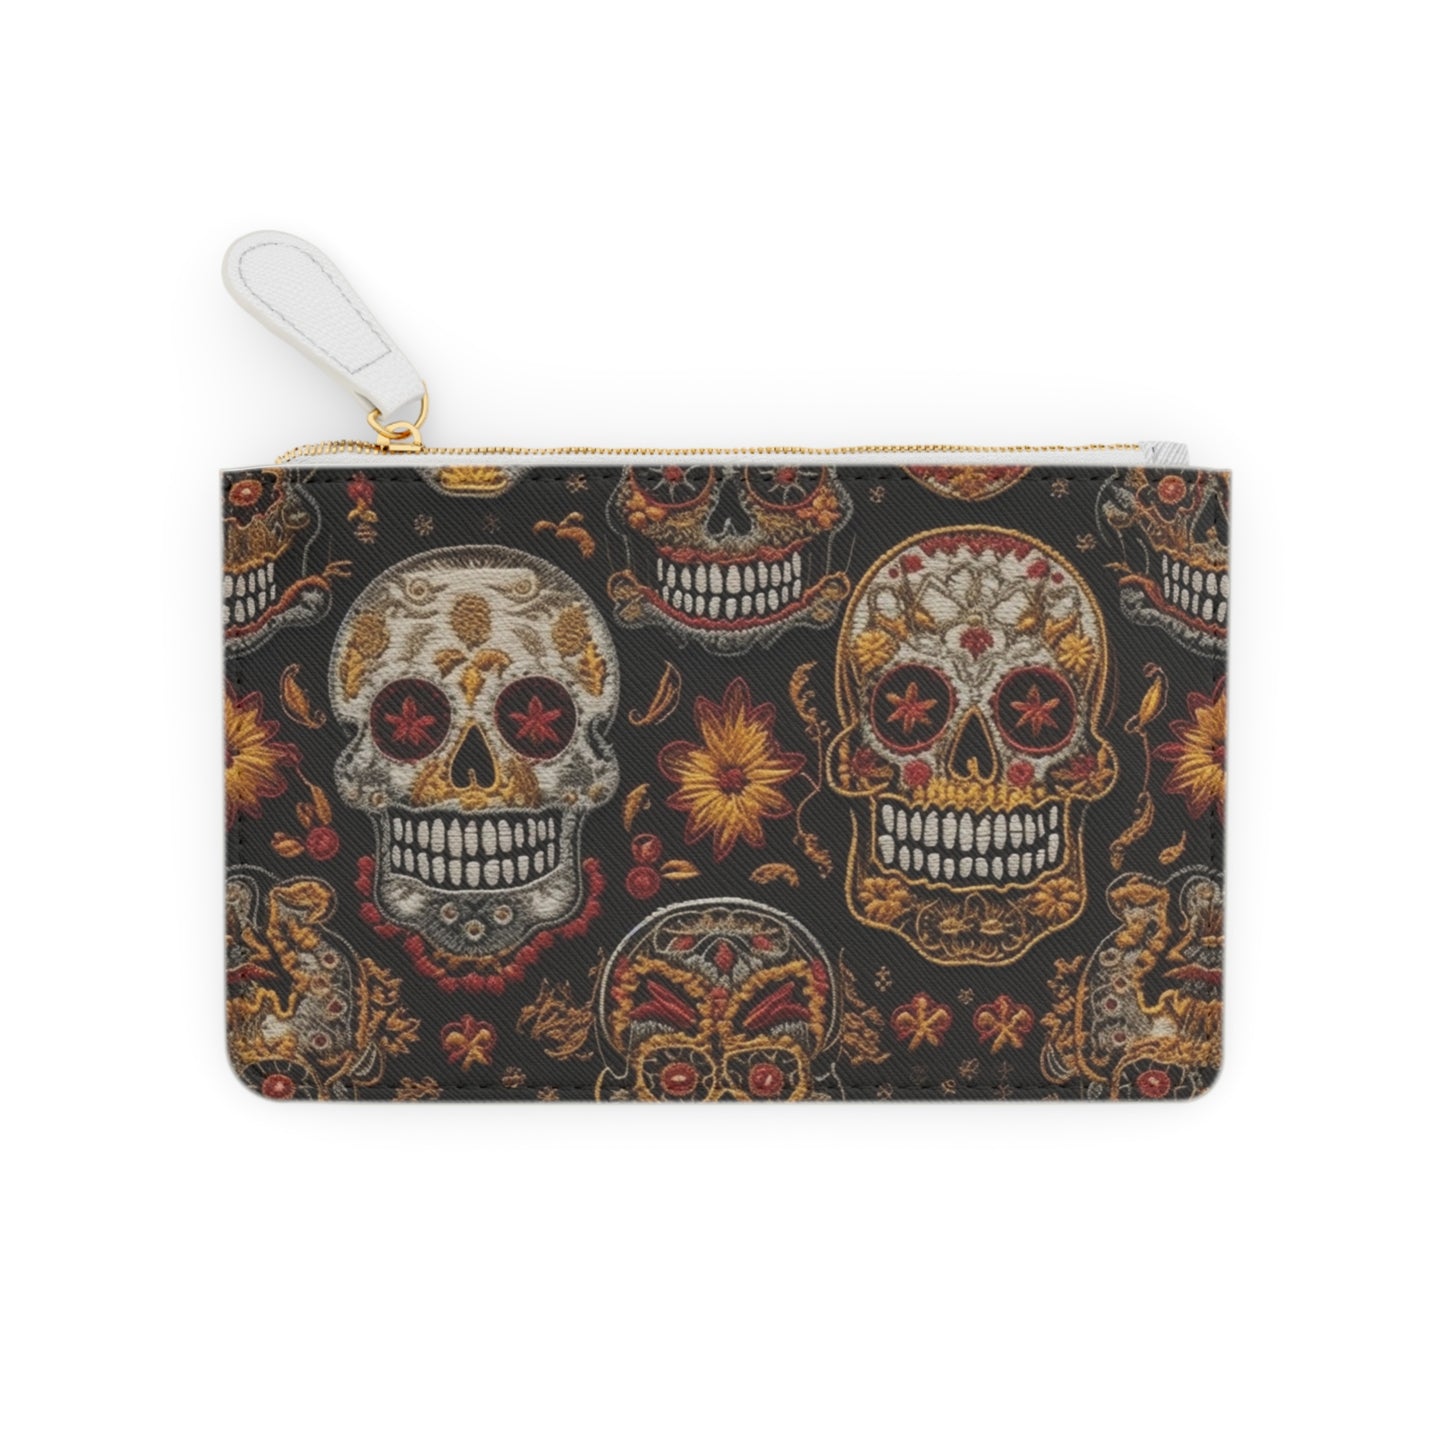 Embroidered Skulls Mini Clutch Bag